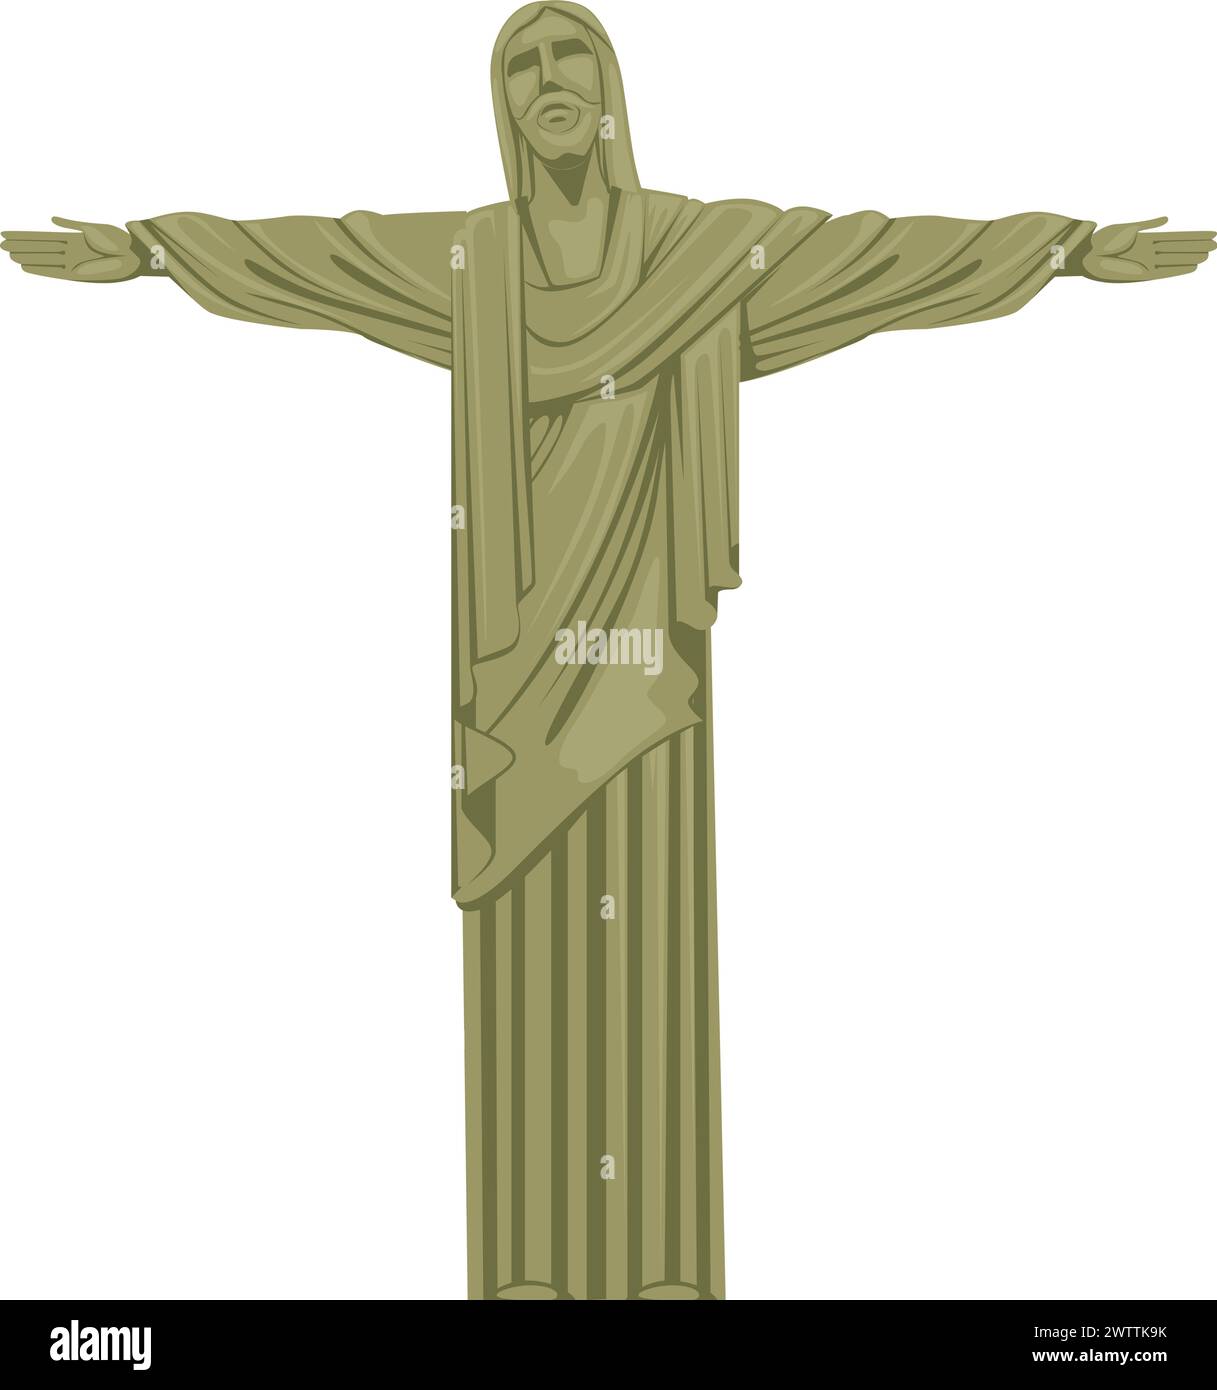 Statue of Jesus Christ. Famous landmark travel cartoon icon Stock Vector